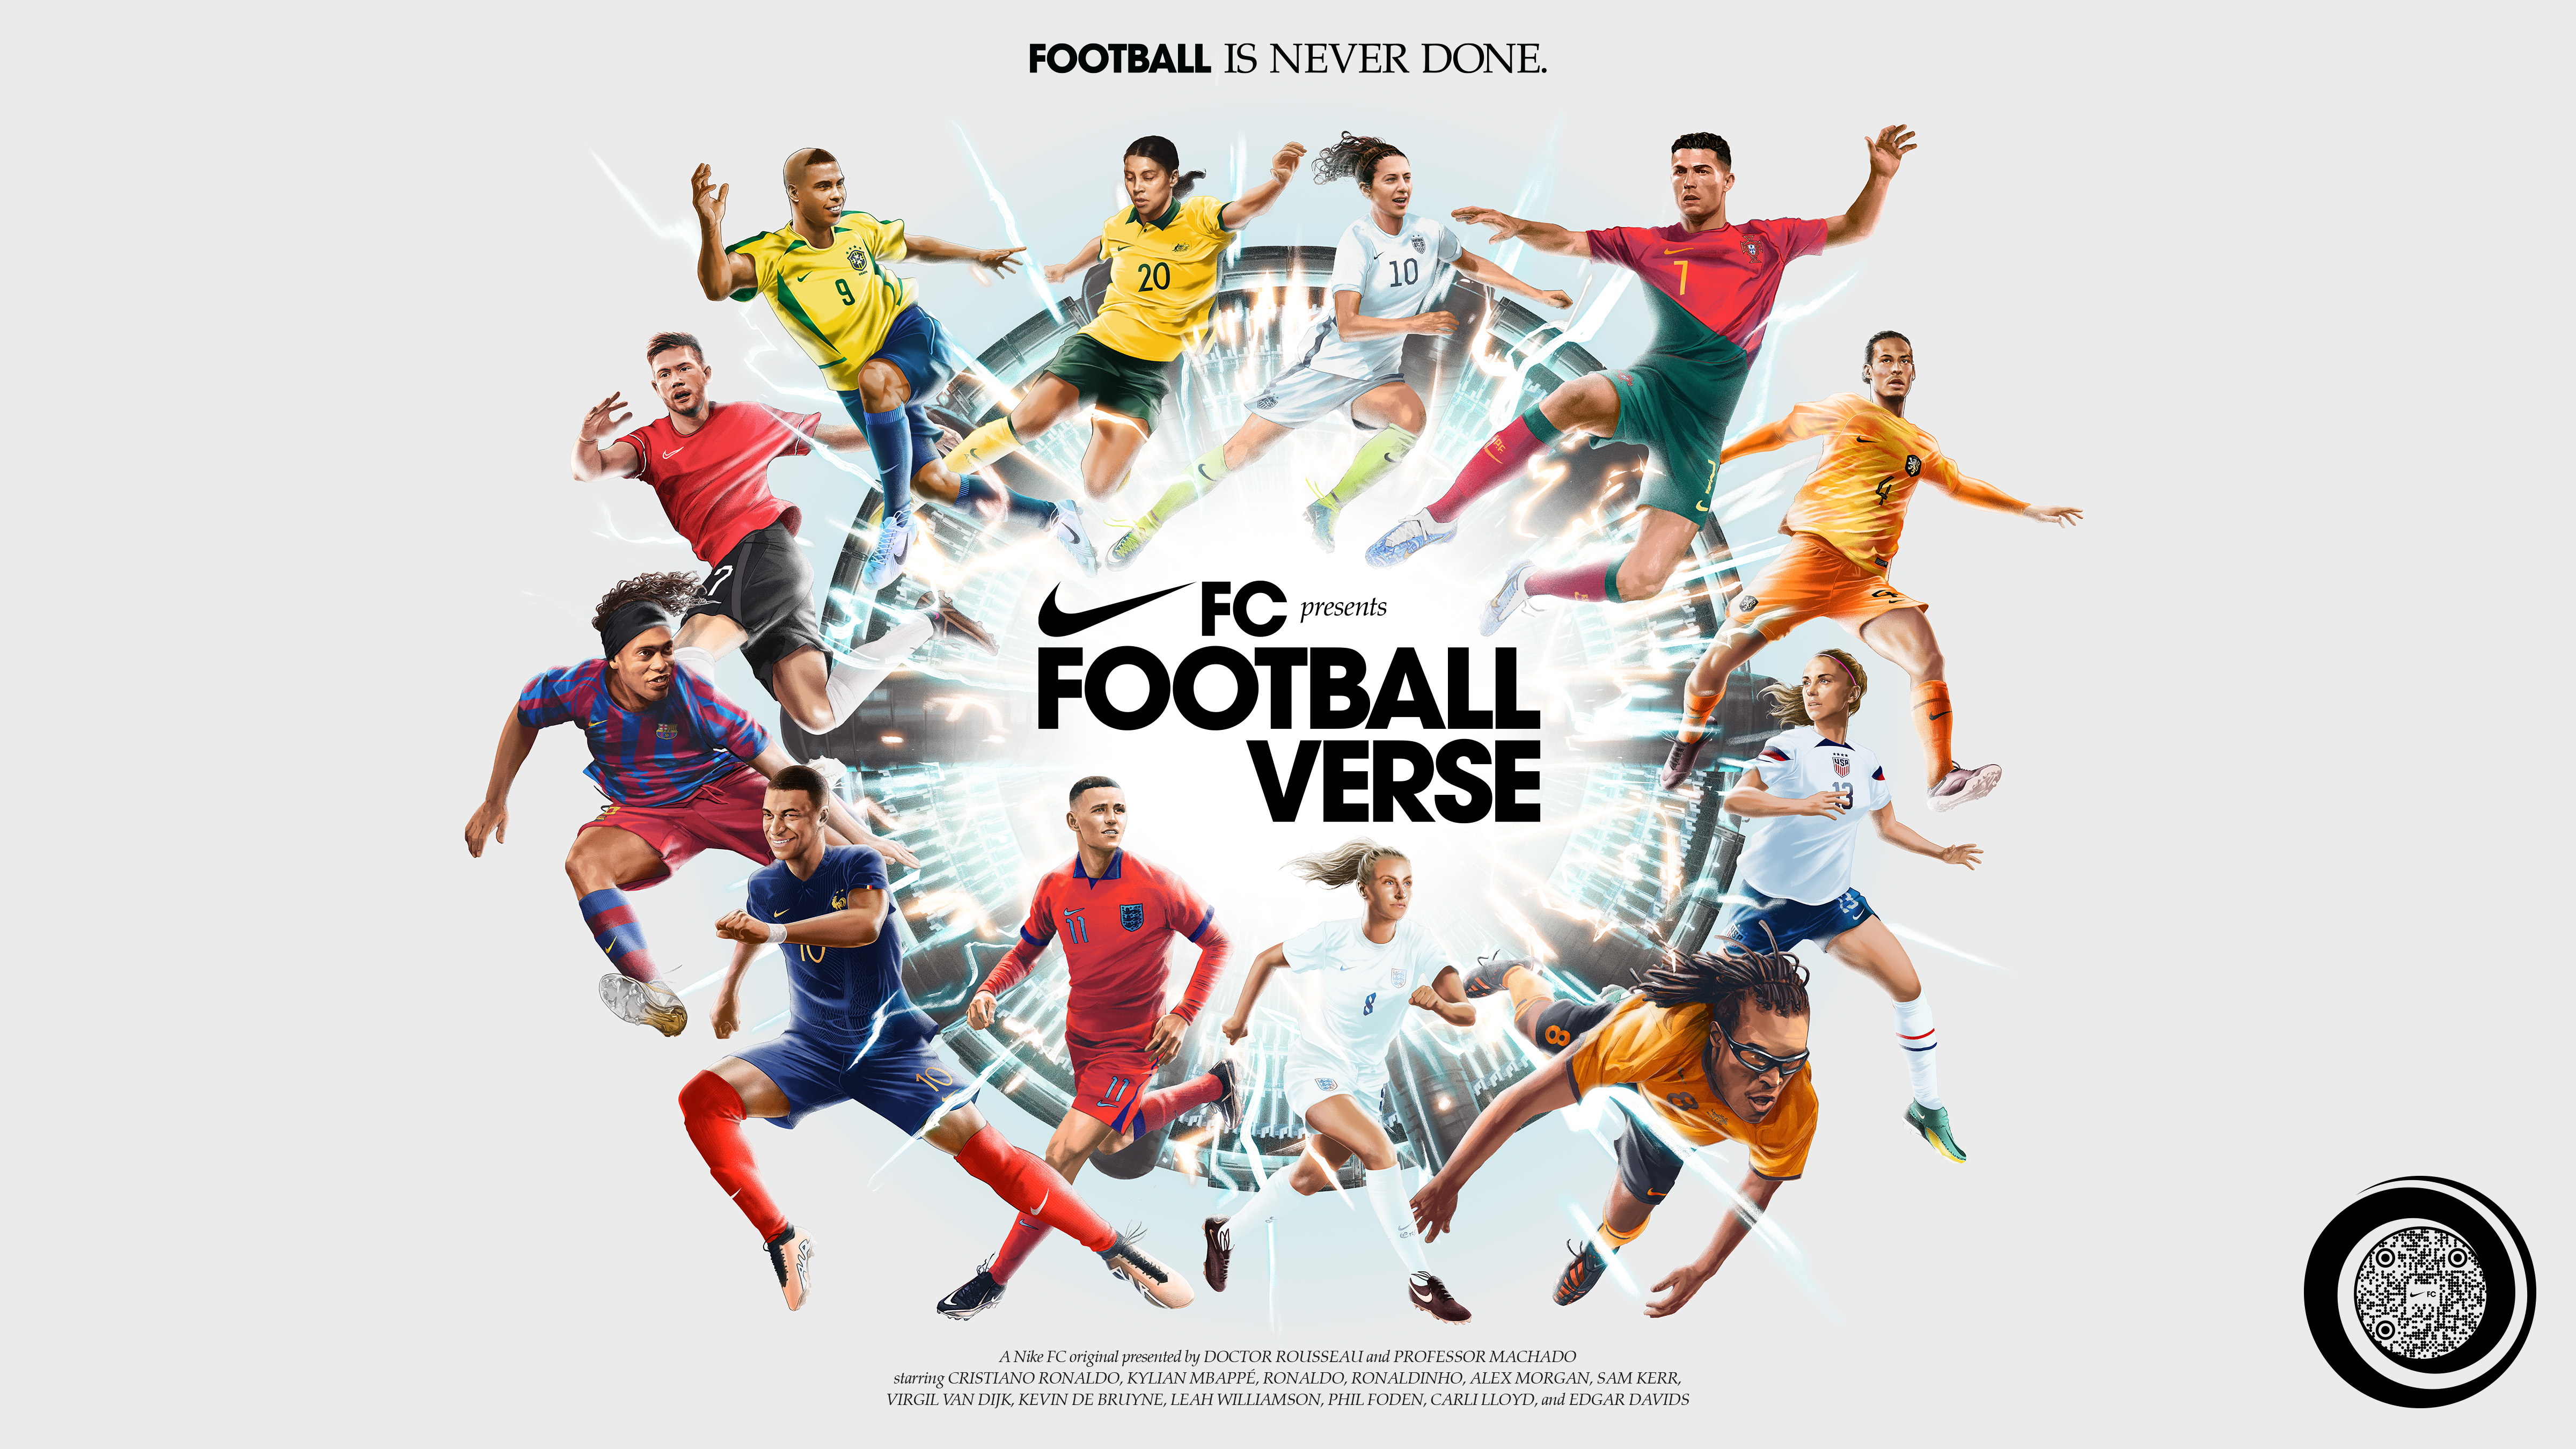 NIKE FC 獻上 「FOOTBALLVERSE」形象影片 鼓勵新世代足球運動員勇於實踐